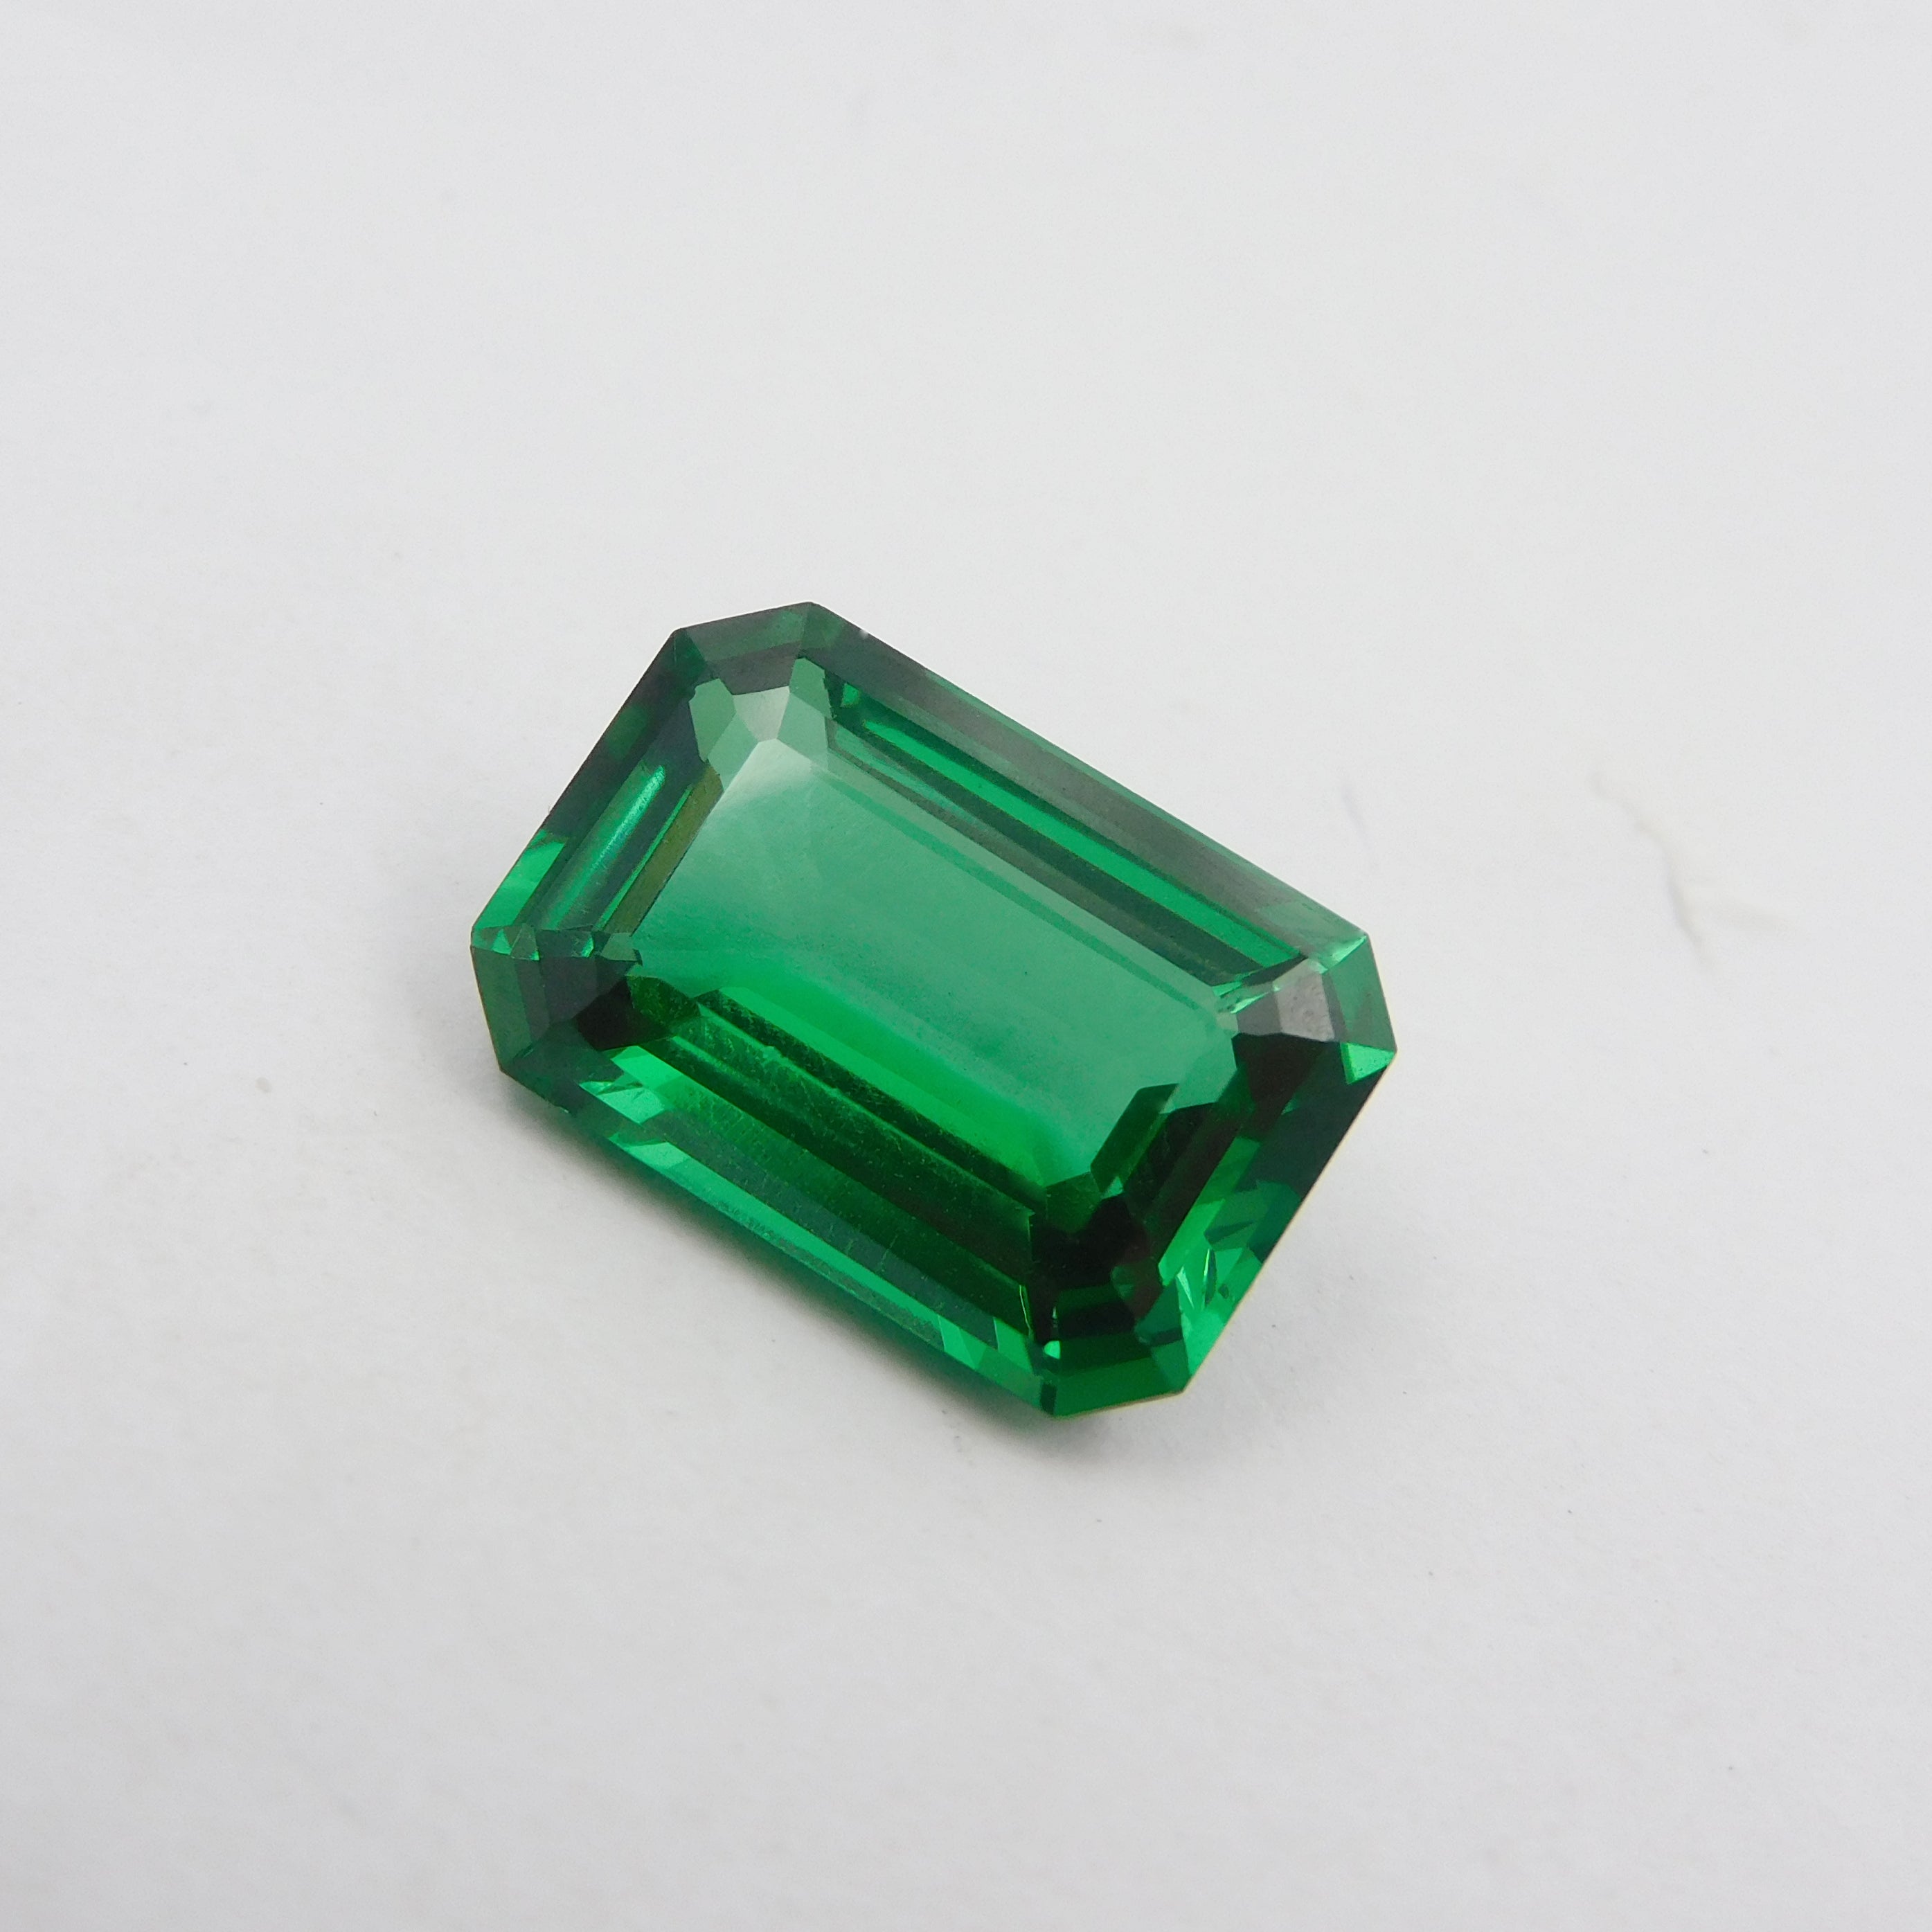 Awesome Gemstone !! Beautiful Ring !! Emerald Cut 8.65 Carat Green Natural Tourmaline Certified Loose Gemstone